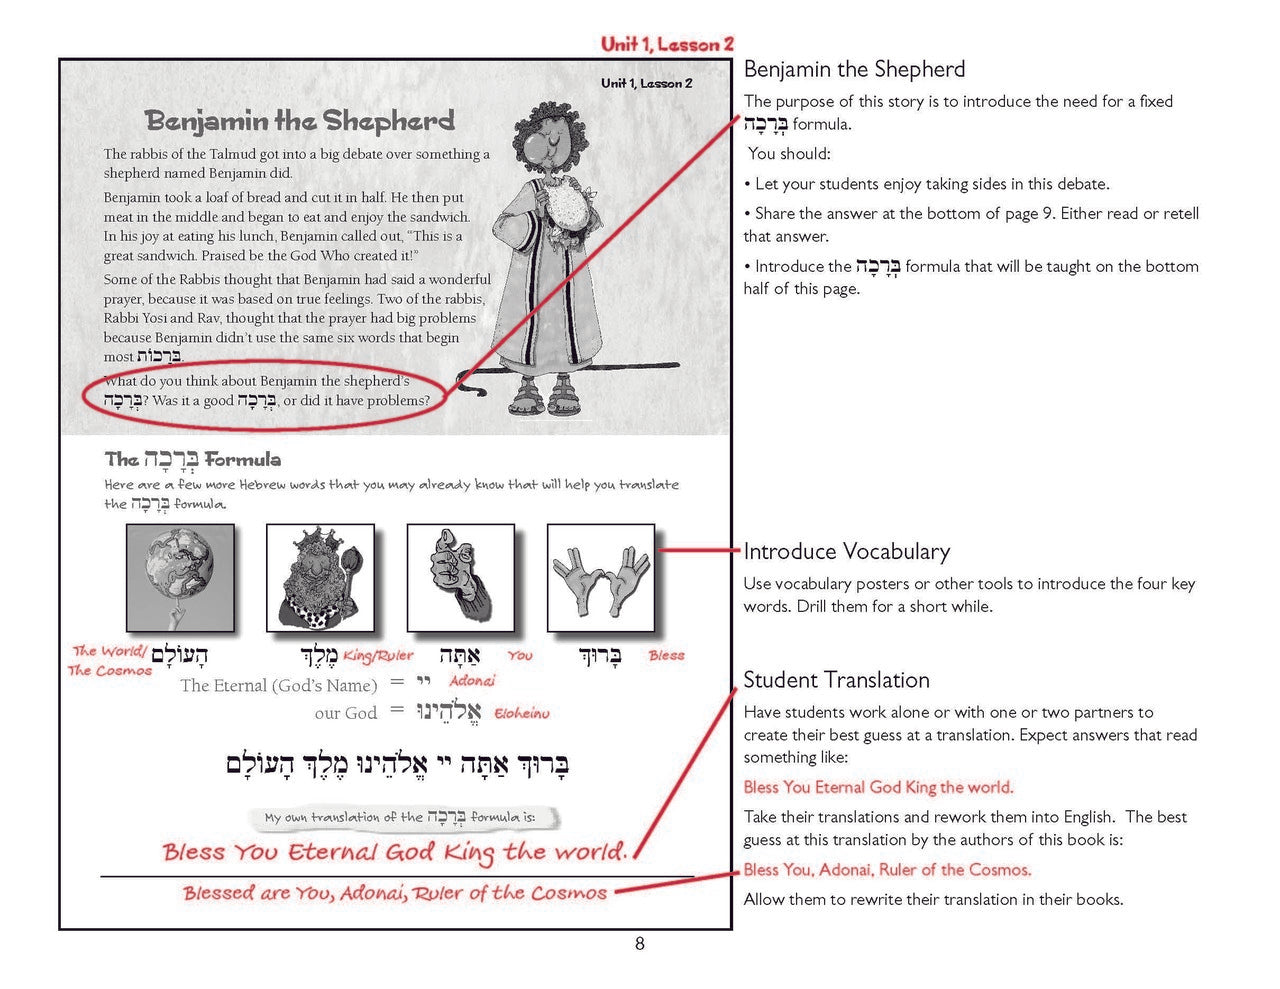 S'fatai Tiftah: Siddur Mastery & Meaning Volume 1 Teacher Guide